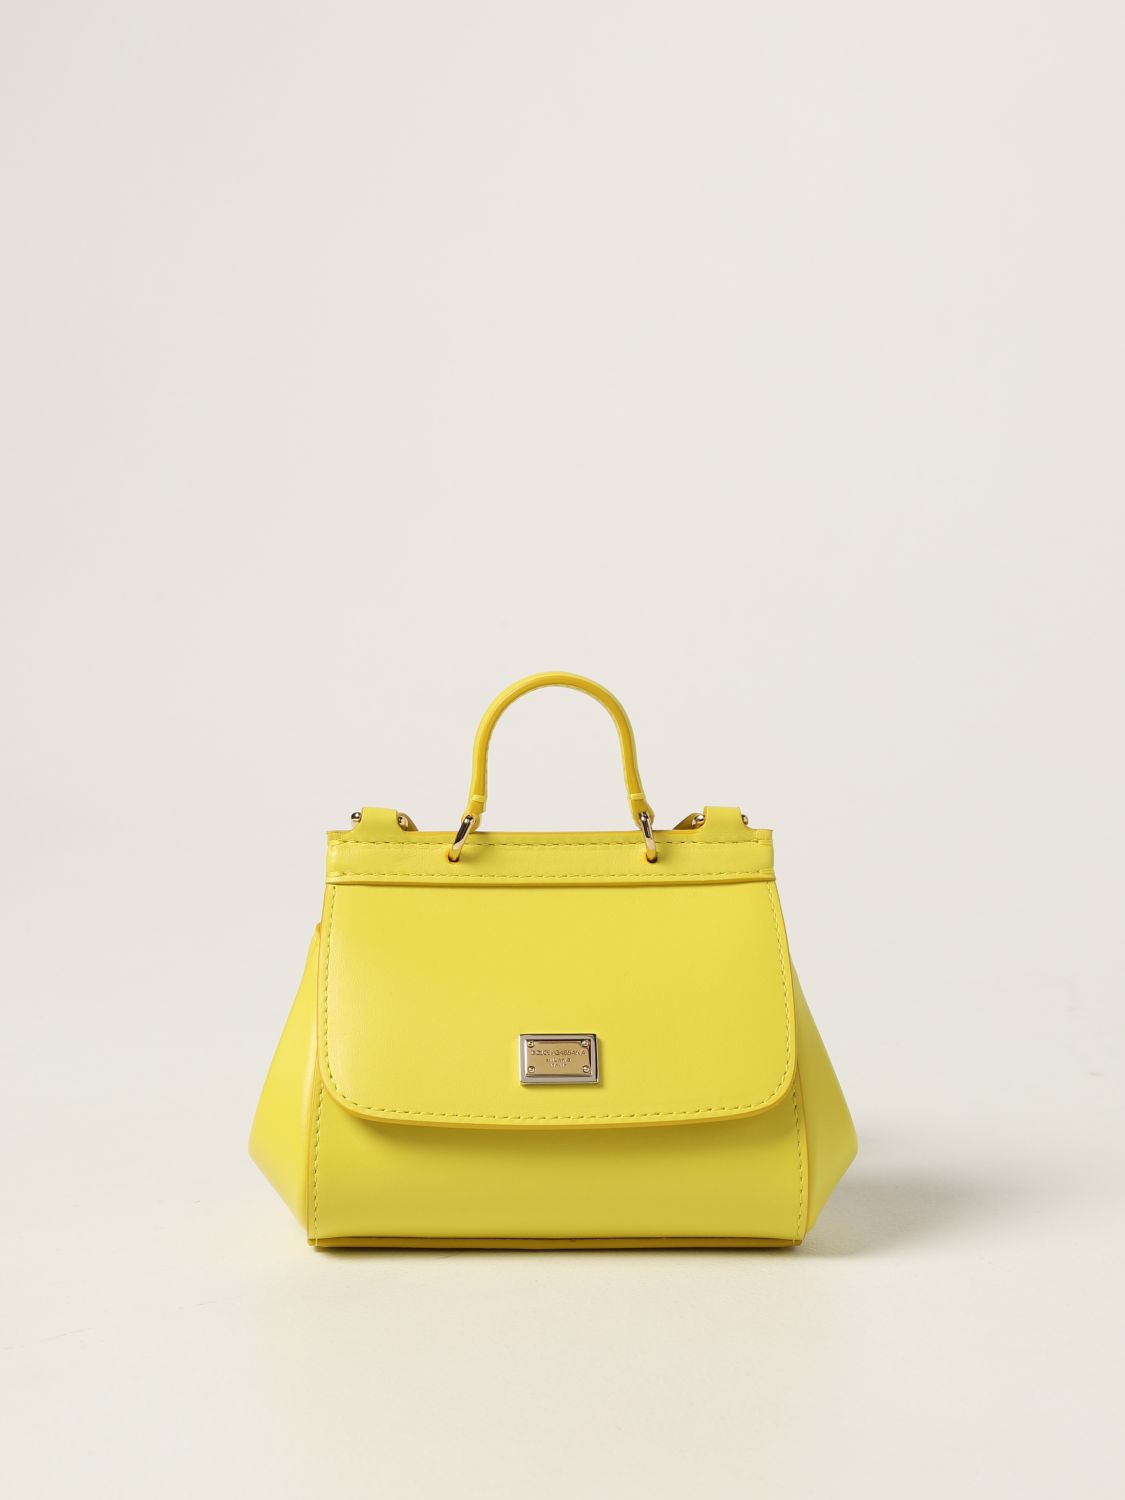 Dolce & Gabbana Small sicily bag for Women - GB